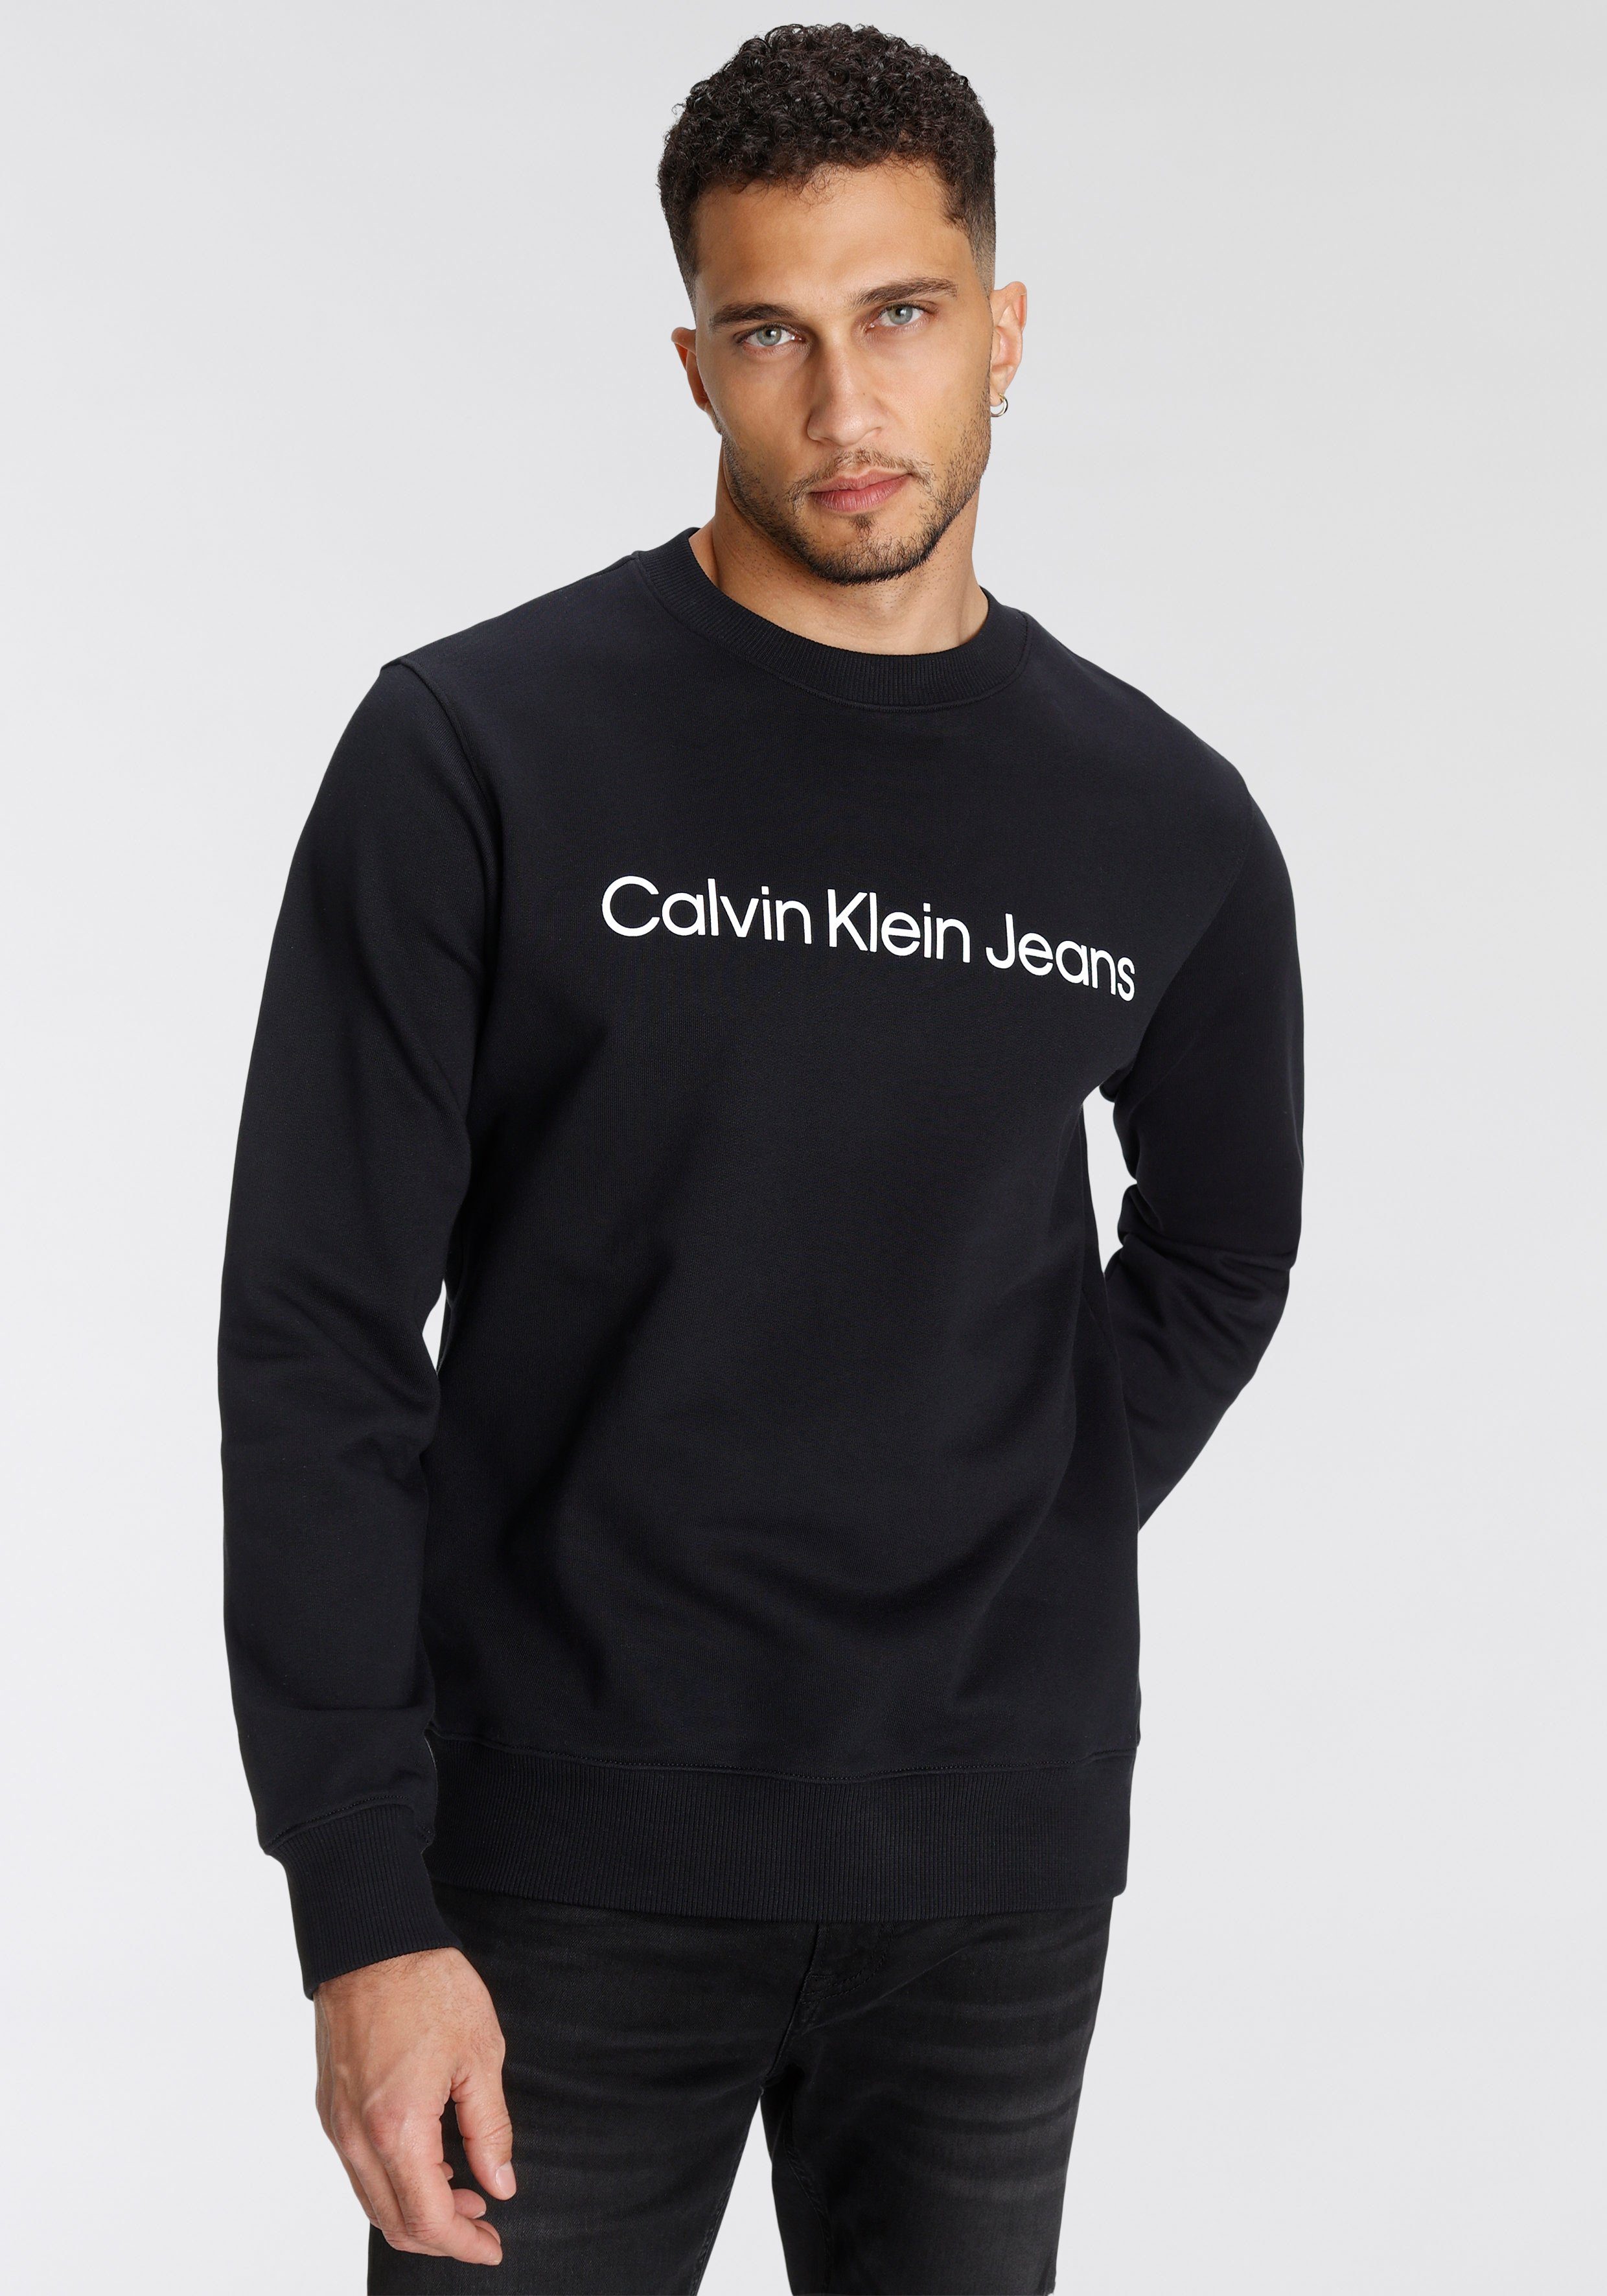 SWEATSHIRT Klein Jeans Calvin INSTIT CORE LOGO Sweatshirt